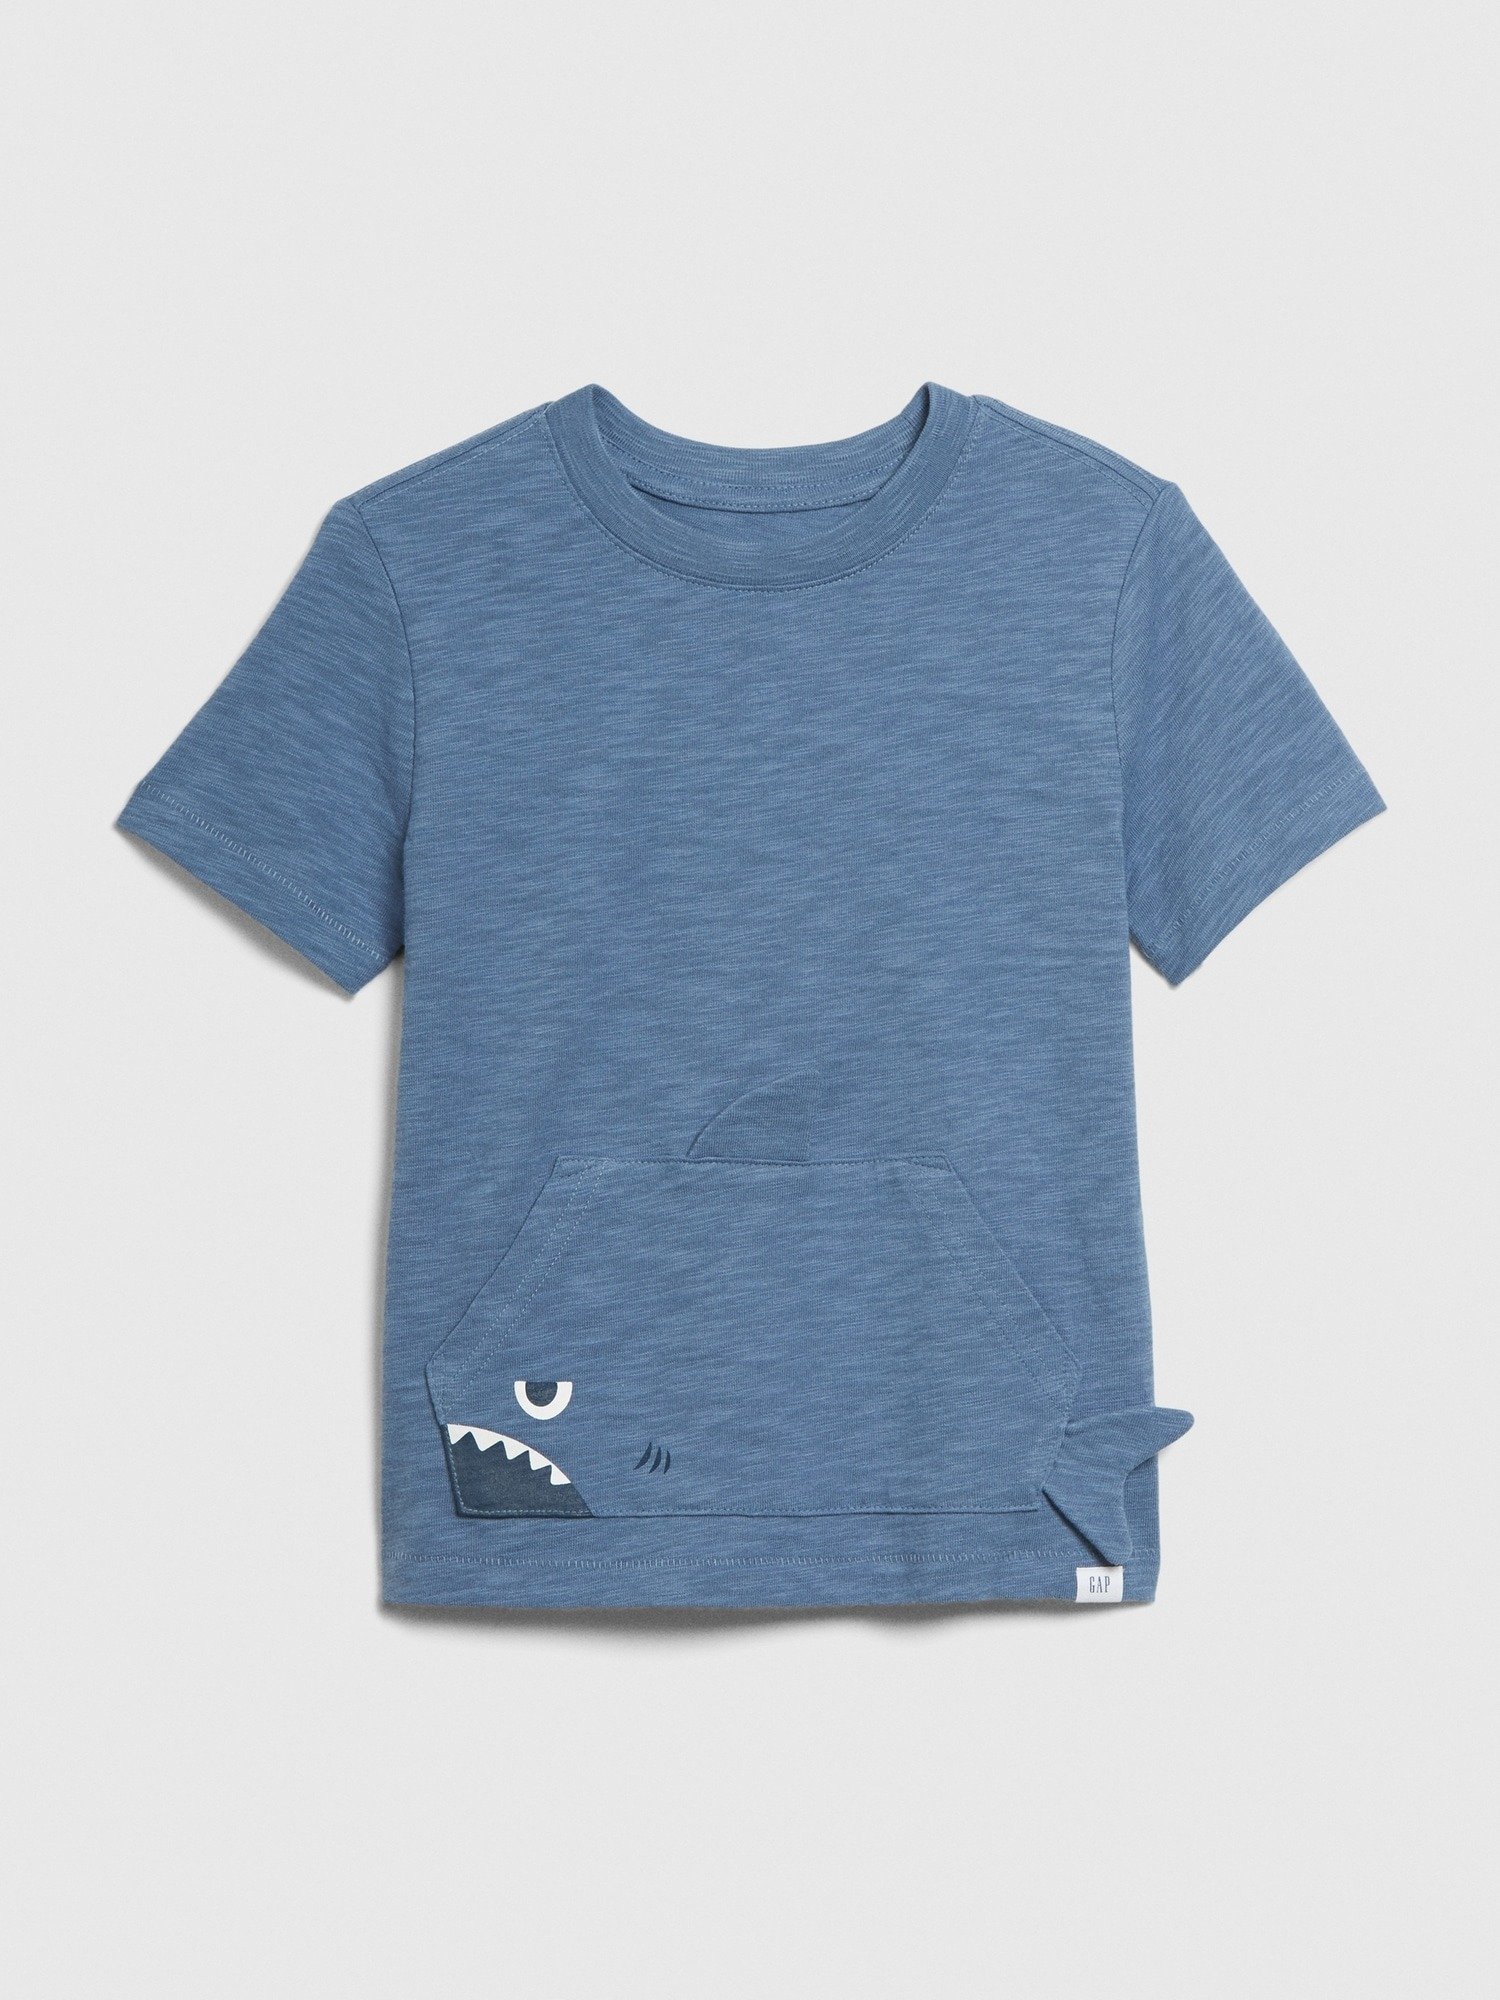 3 Boyutlu Cep Detaylı T-Shirt product image